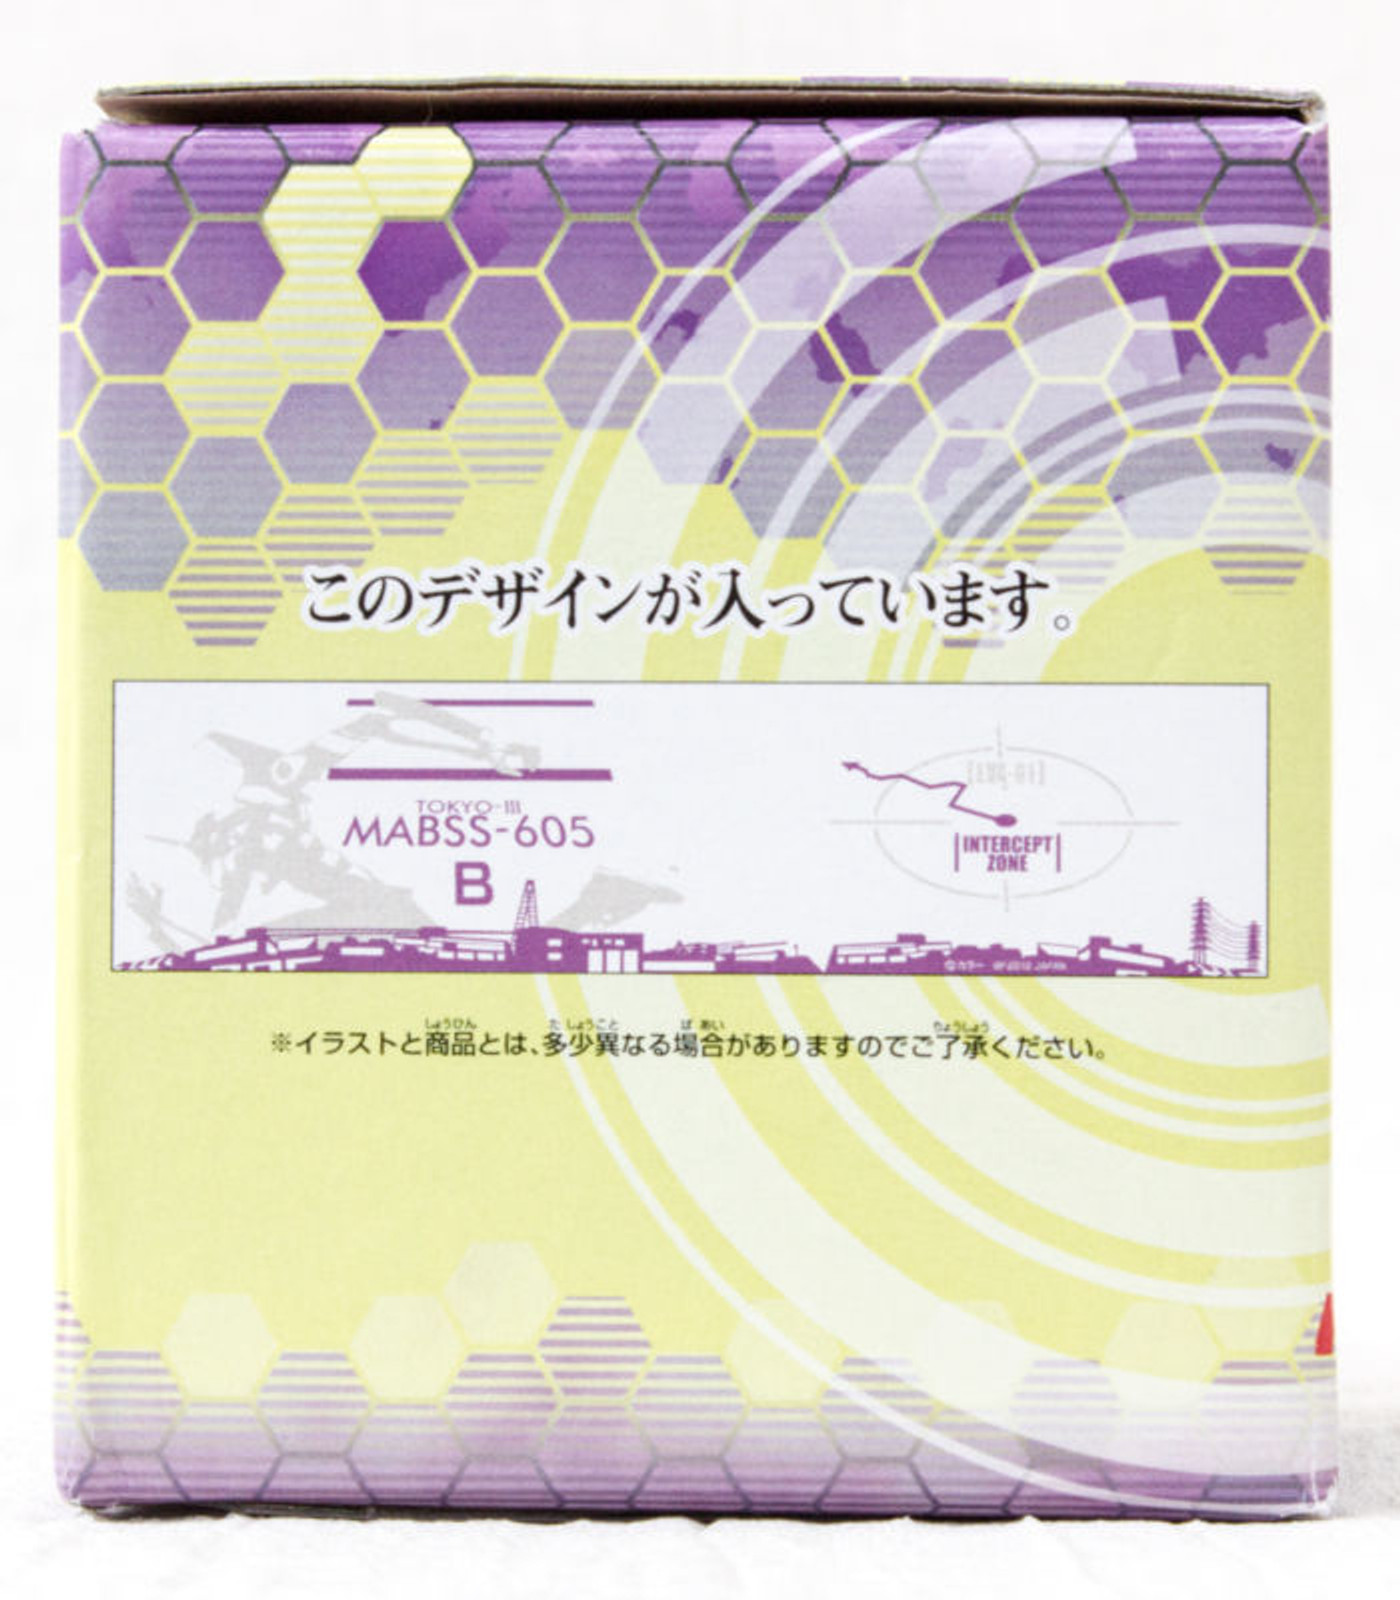 Evangelion Glass EVA-01 Tokyo MABSS-605 Ver. Banpresto JAPAN ANIME